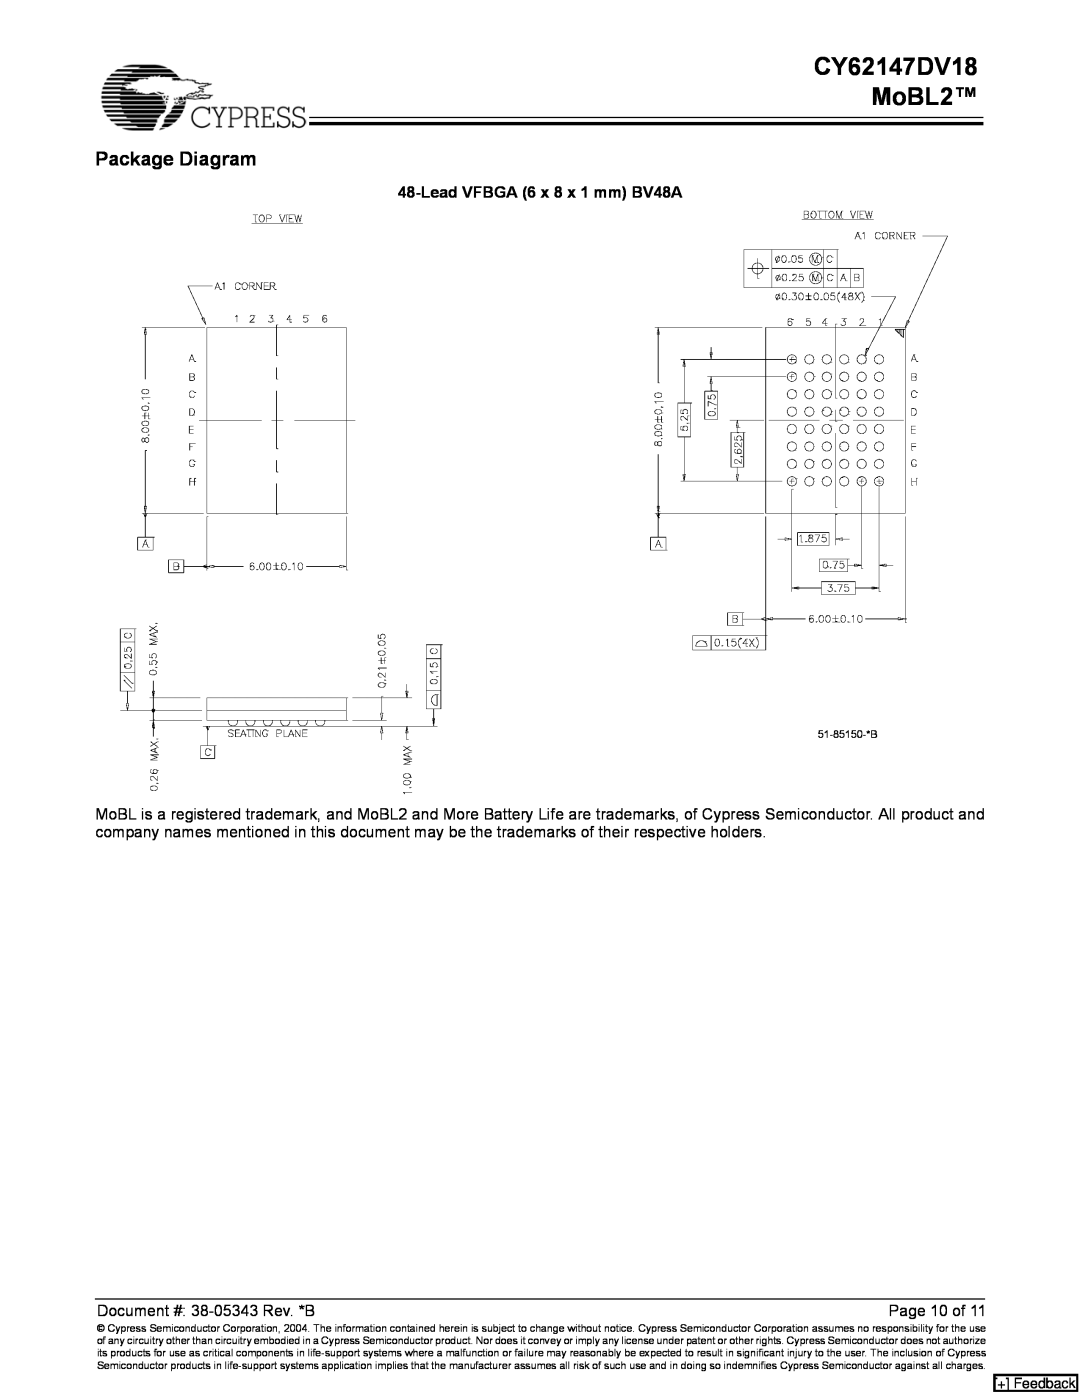 Cypress manual Package Diagram, CY62147DV18 MoBL2, Lead VFBGA 6 x 8 x 1 mm BV48A, + Feedback 